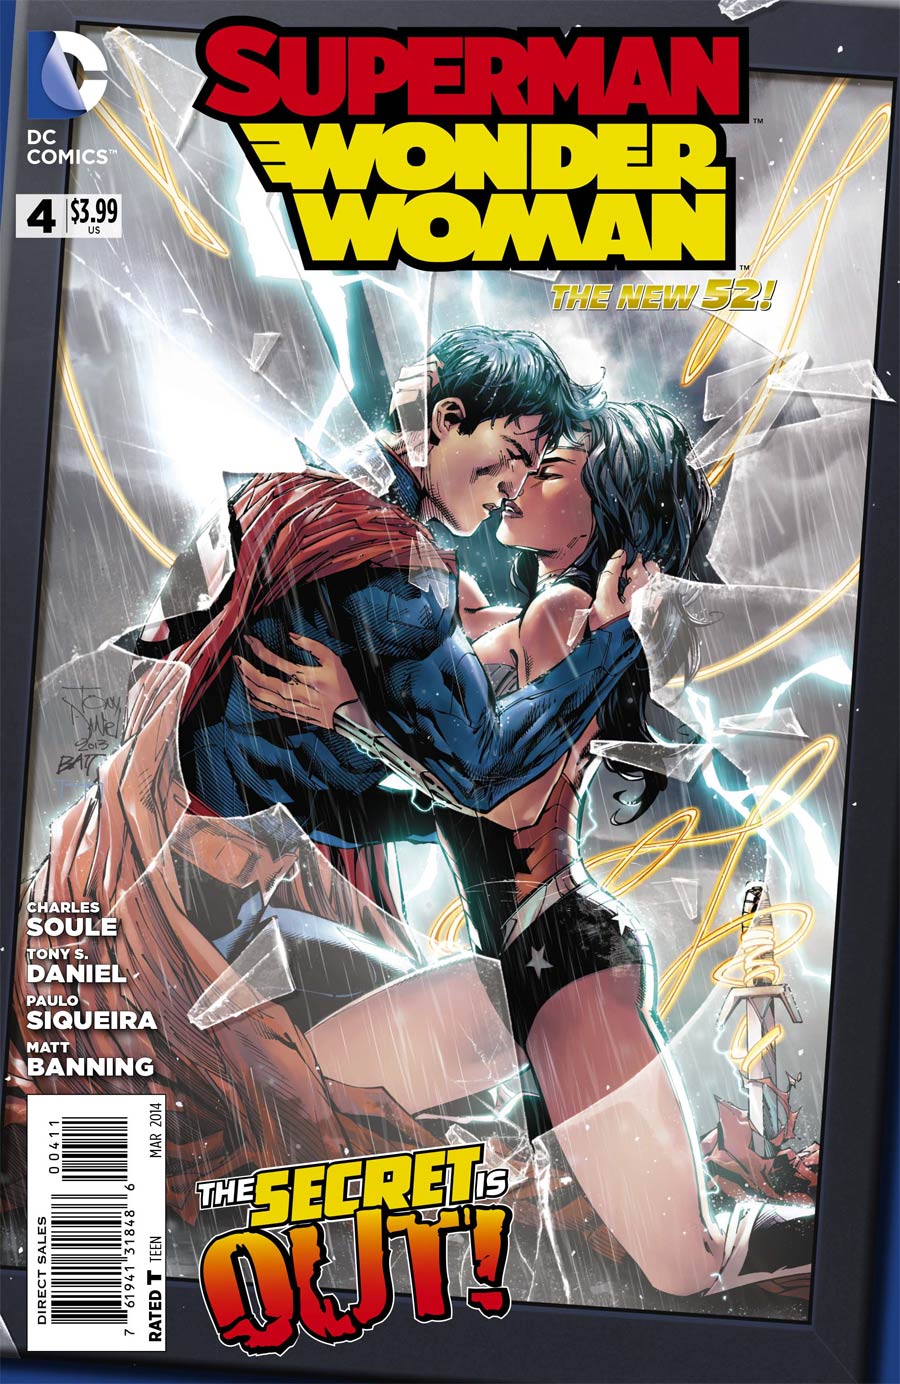 Superman Wonder Woman #4 Cover A Regular Tony S Daniel Cover